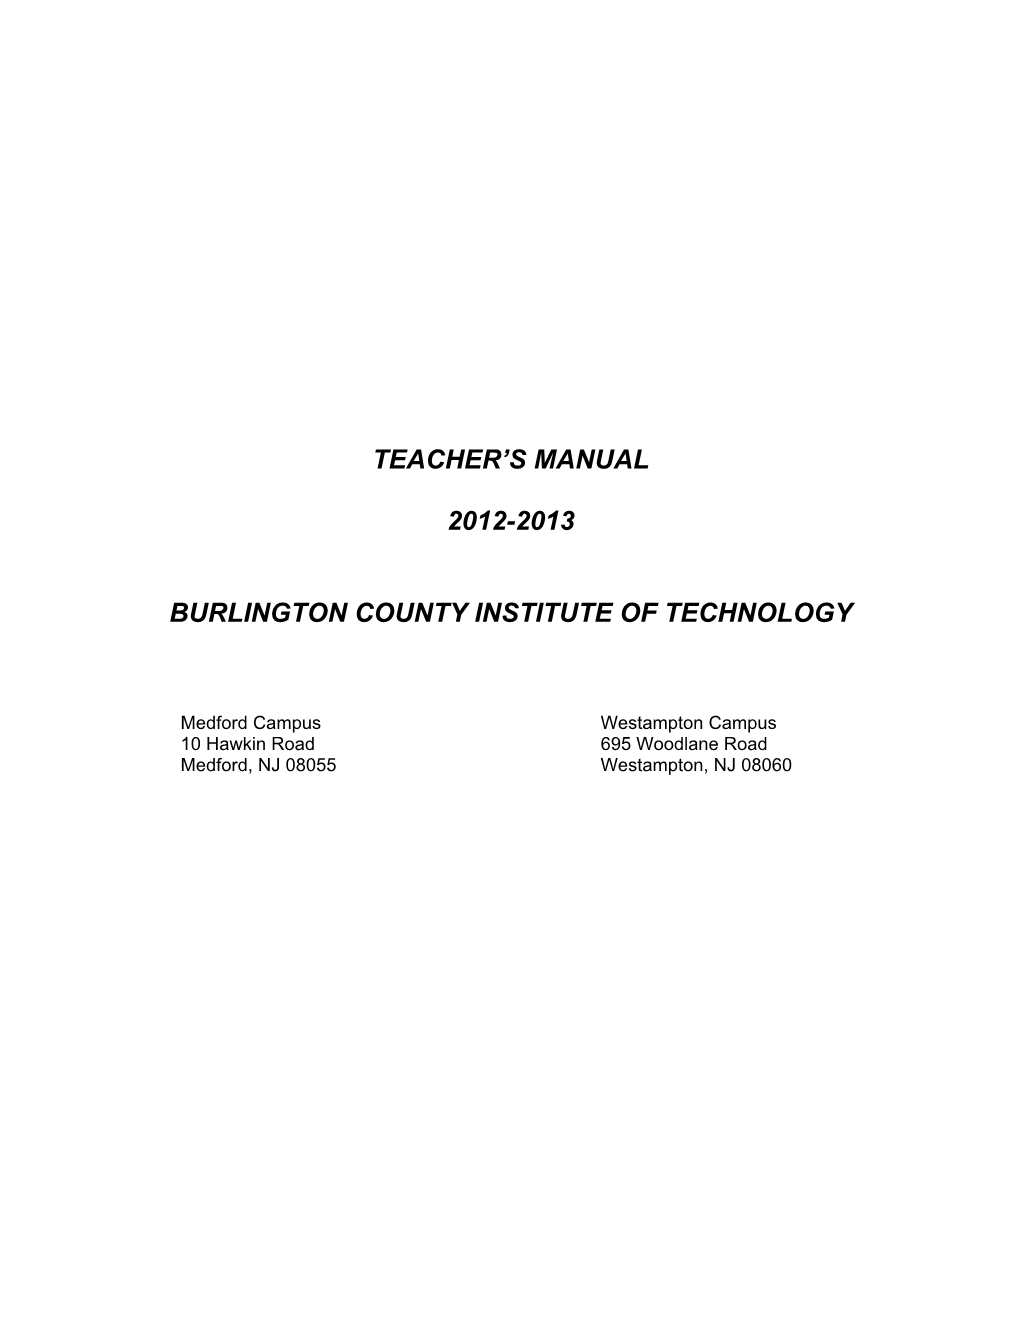 Teacher's Manual 2012-2013 Burlington County